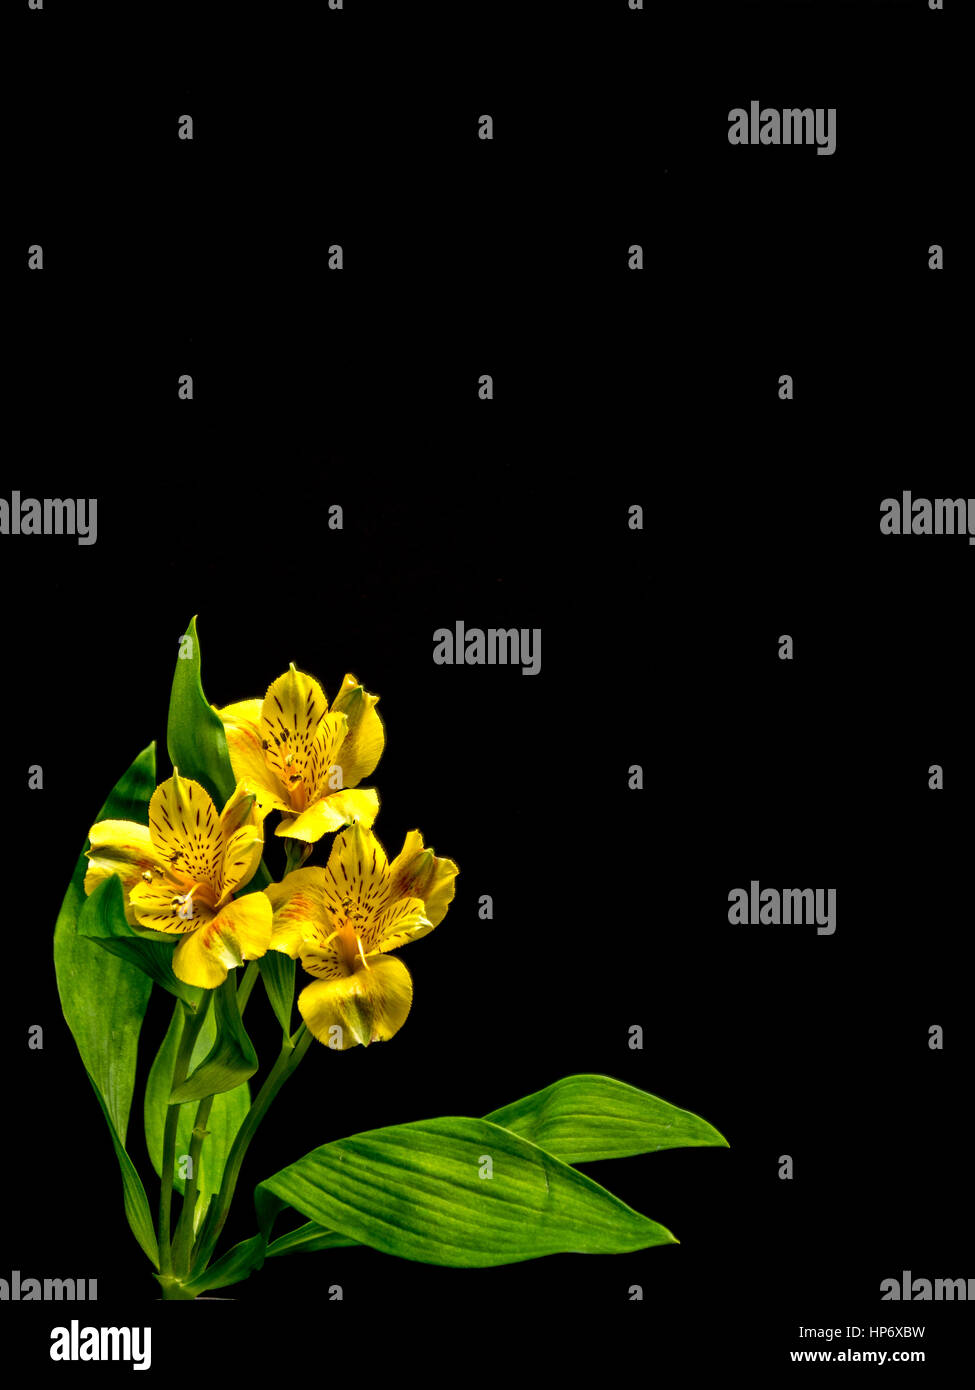 Alstroemeria on black background, portrait orientation Stock Photo